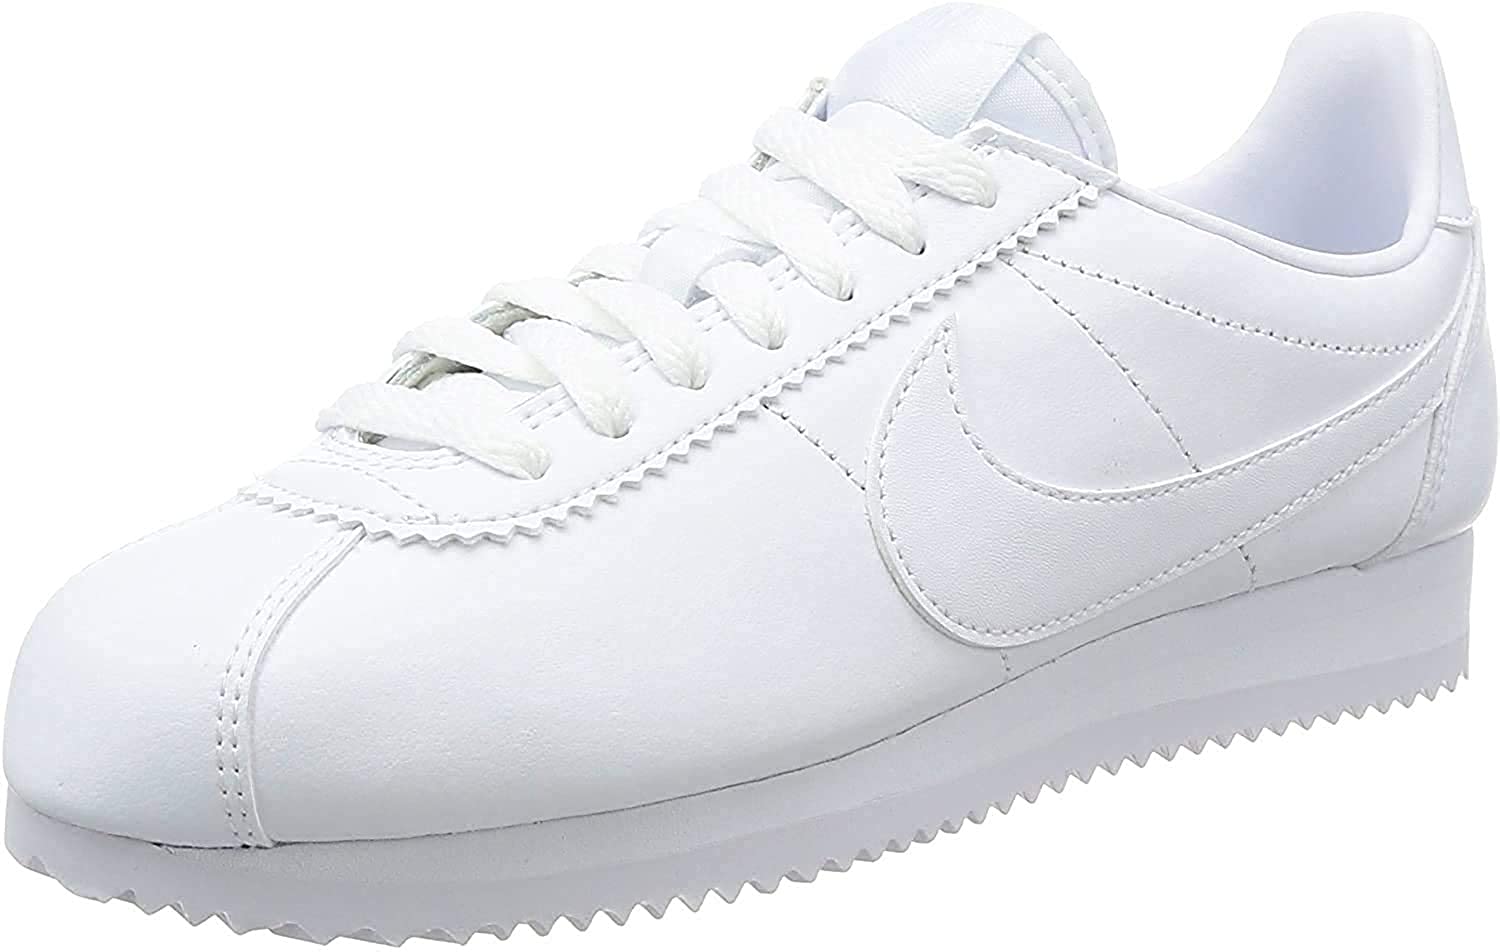 plain white leather tennis shoes